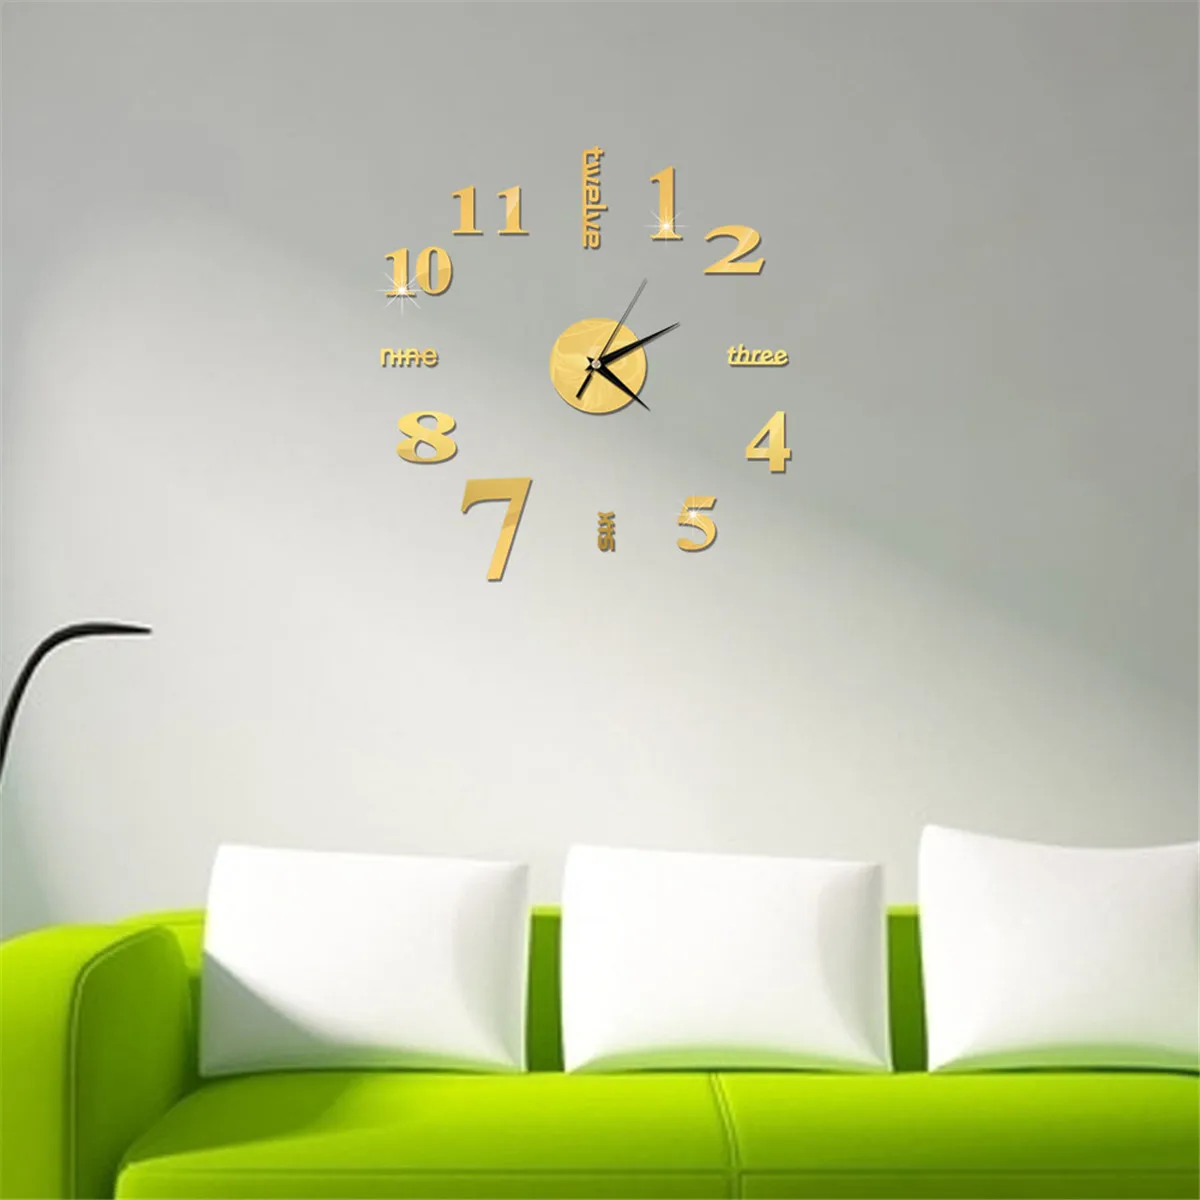 3D Wall Clock Mirror Wall Stickers Creative DIY Wall Clocks Removable Art Decal Sticker Home Decor Living Room Quartz Needle Hot large clock